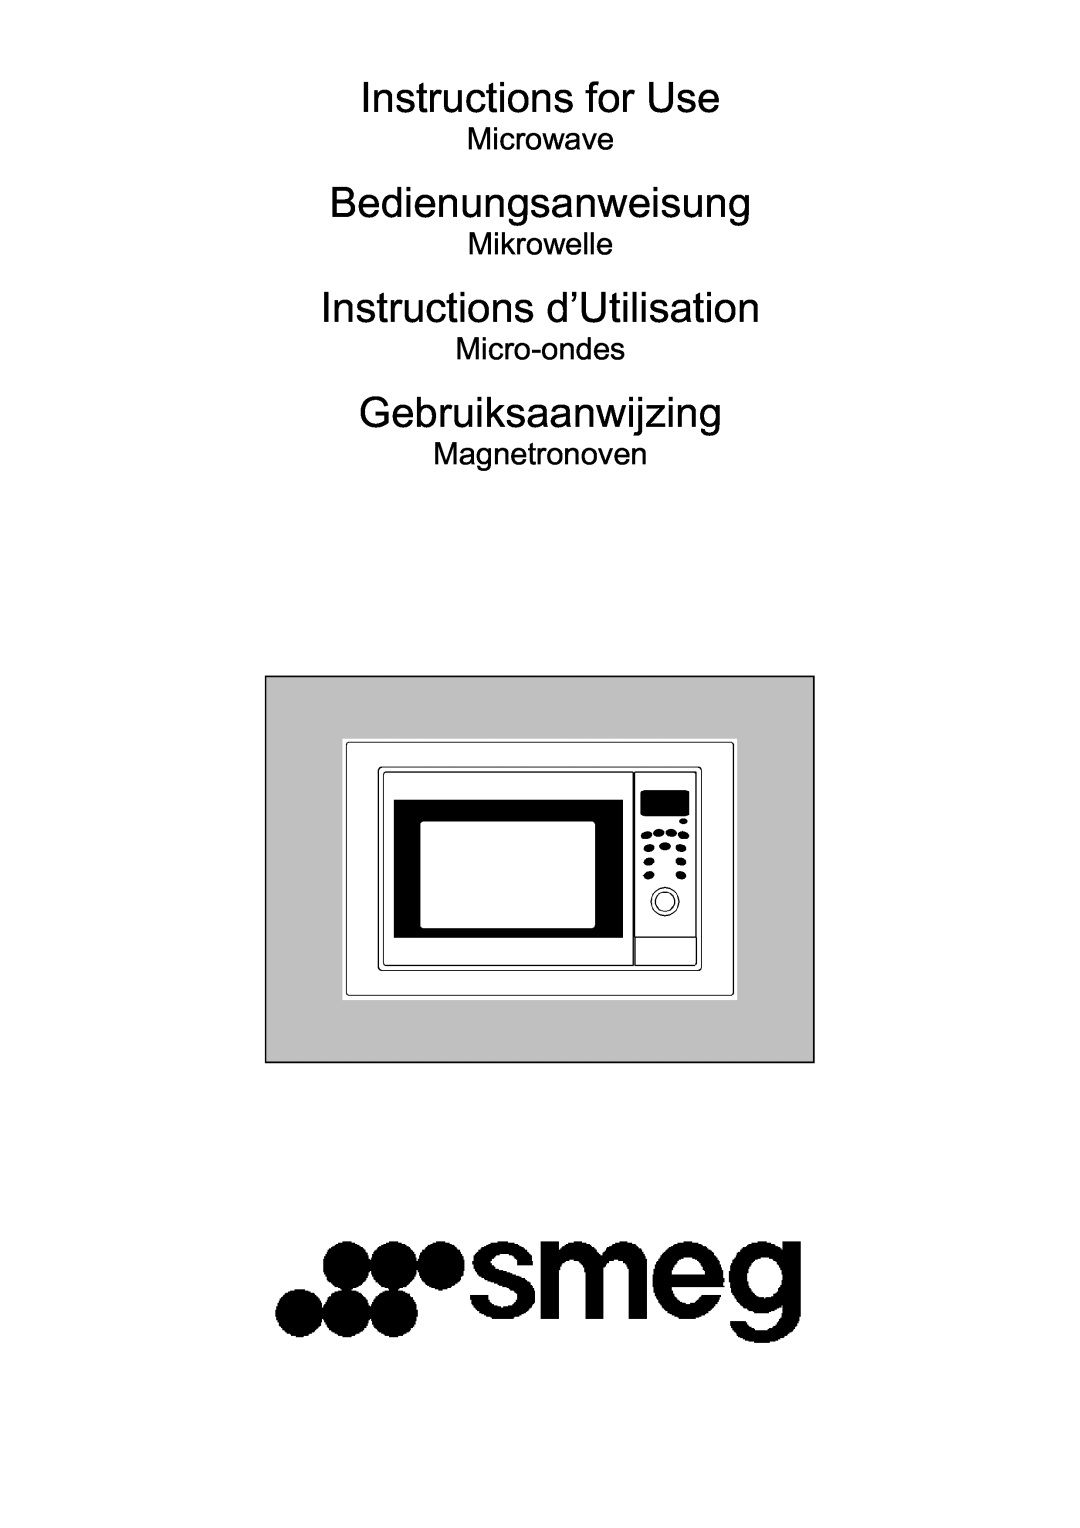 Smeg FME20EX manual Instructions for Use, Bedienungsanweisung, Instructions d’Utilisation, Gebruiksaanwijzing, Microwave 